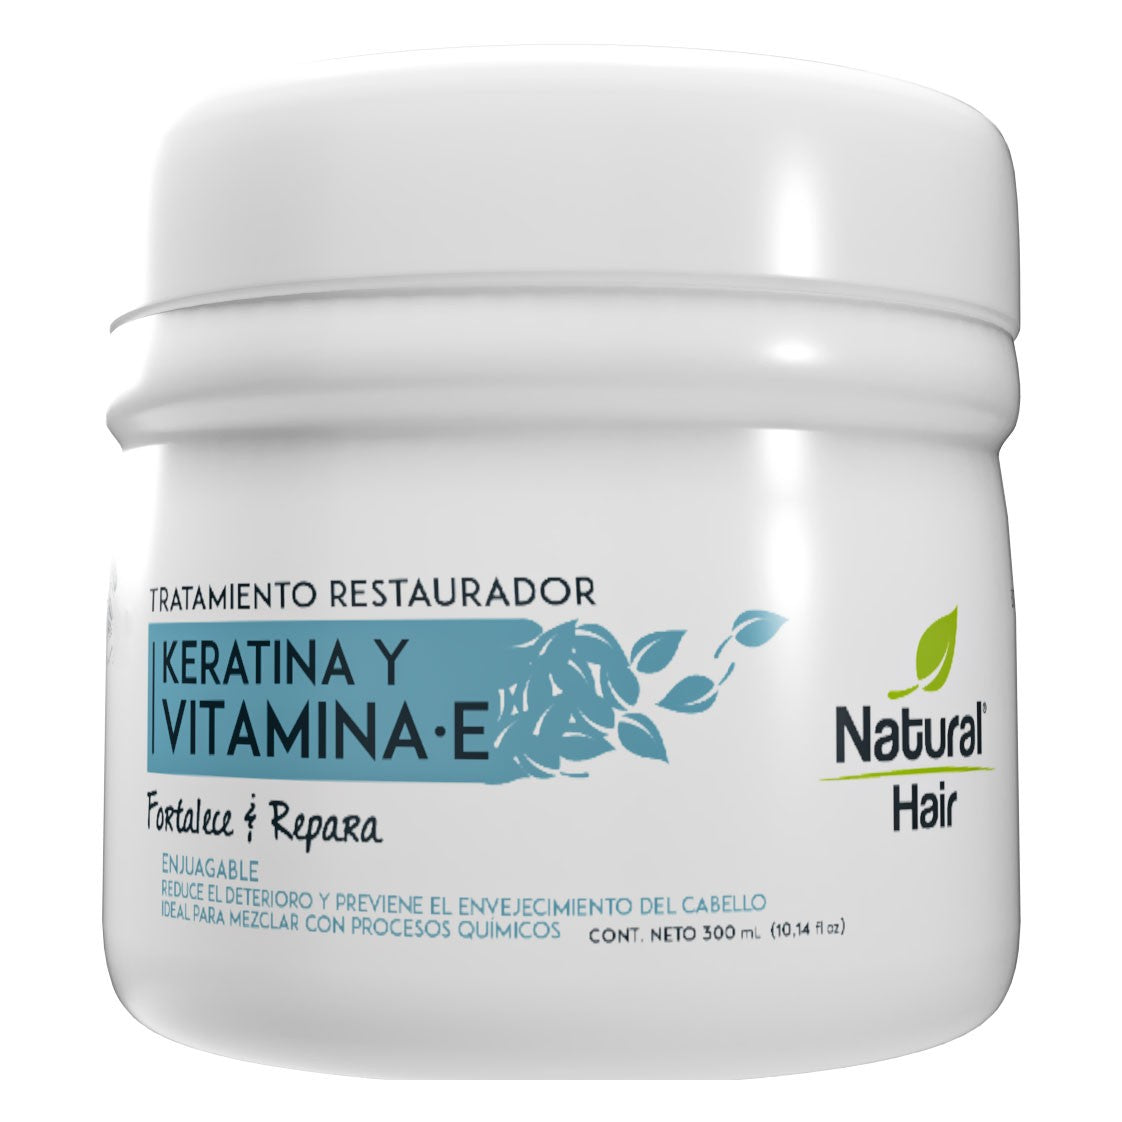 Tratamiento Restaurador Keratina y Vitamina E - Natural Hair